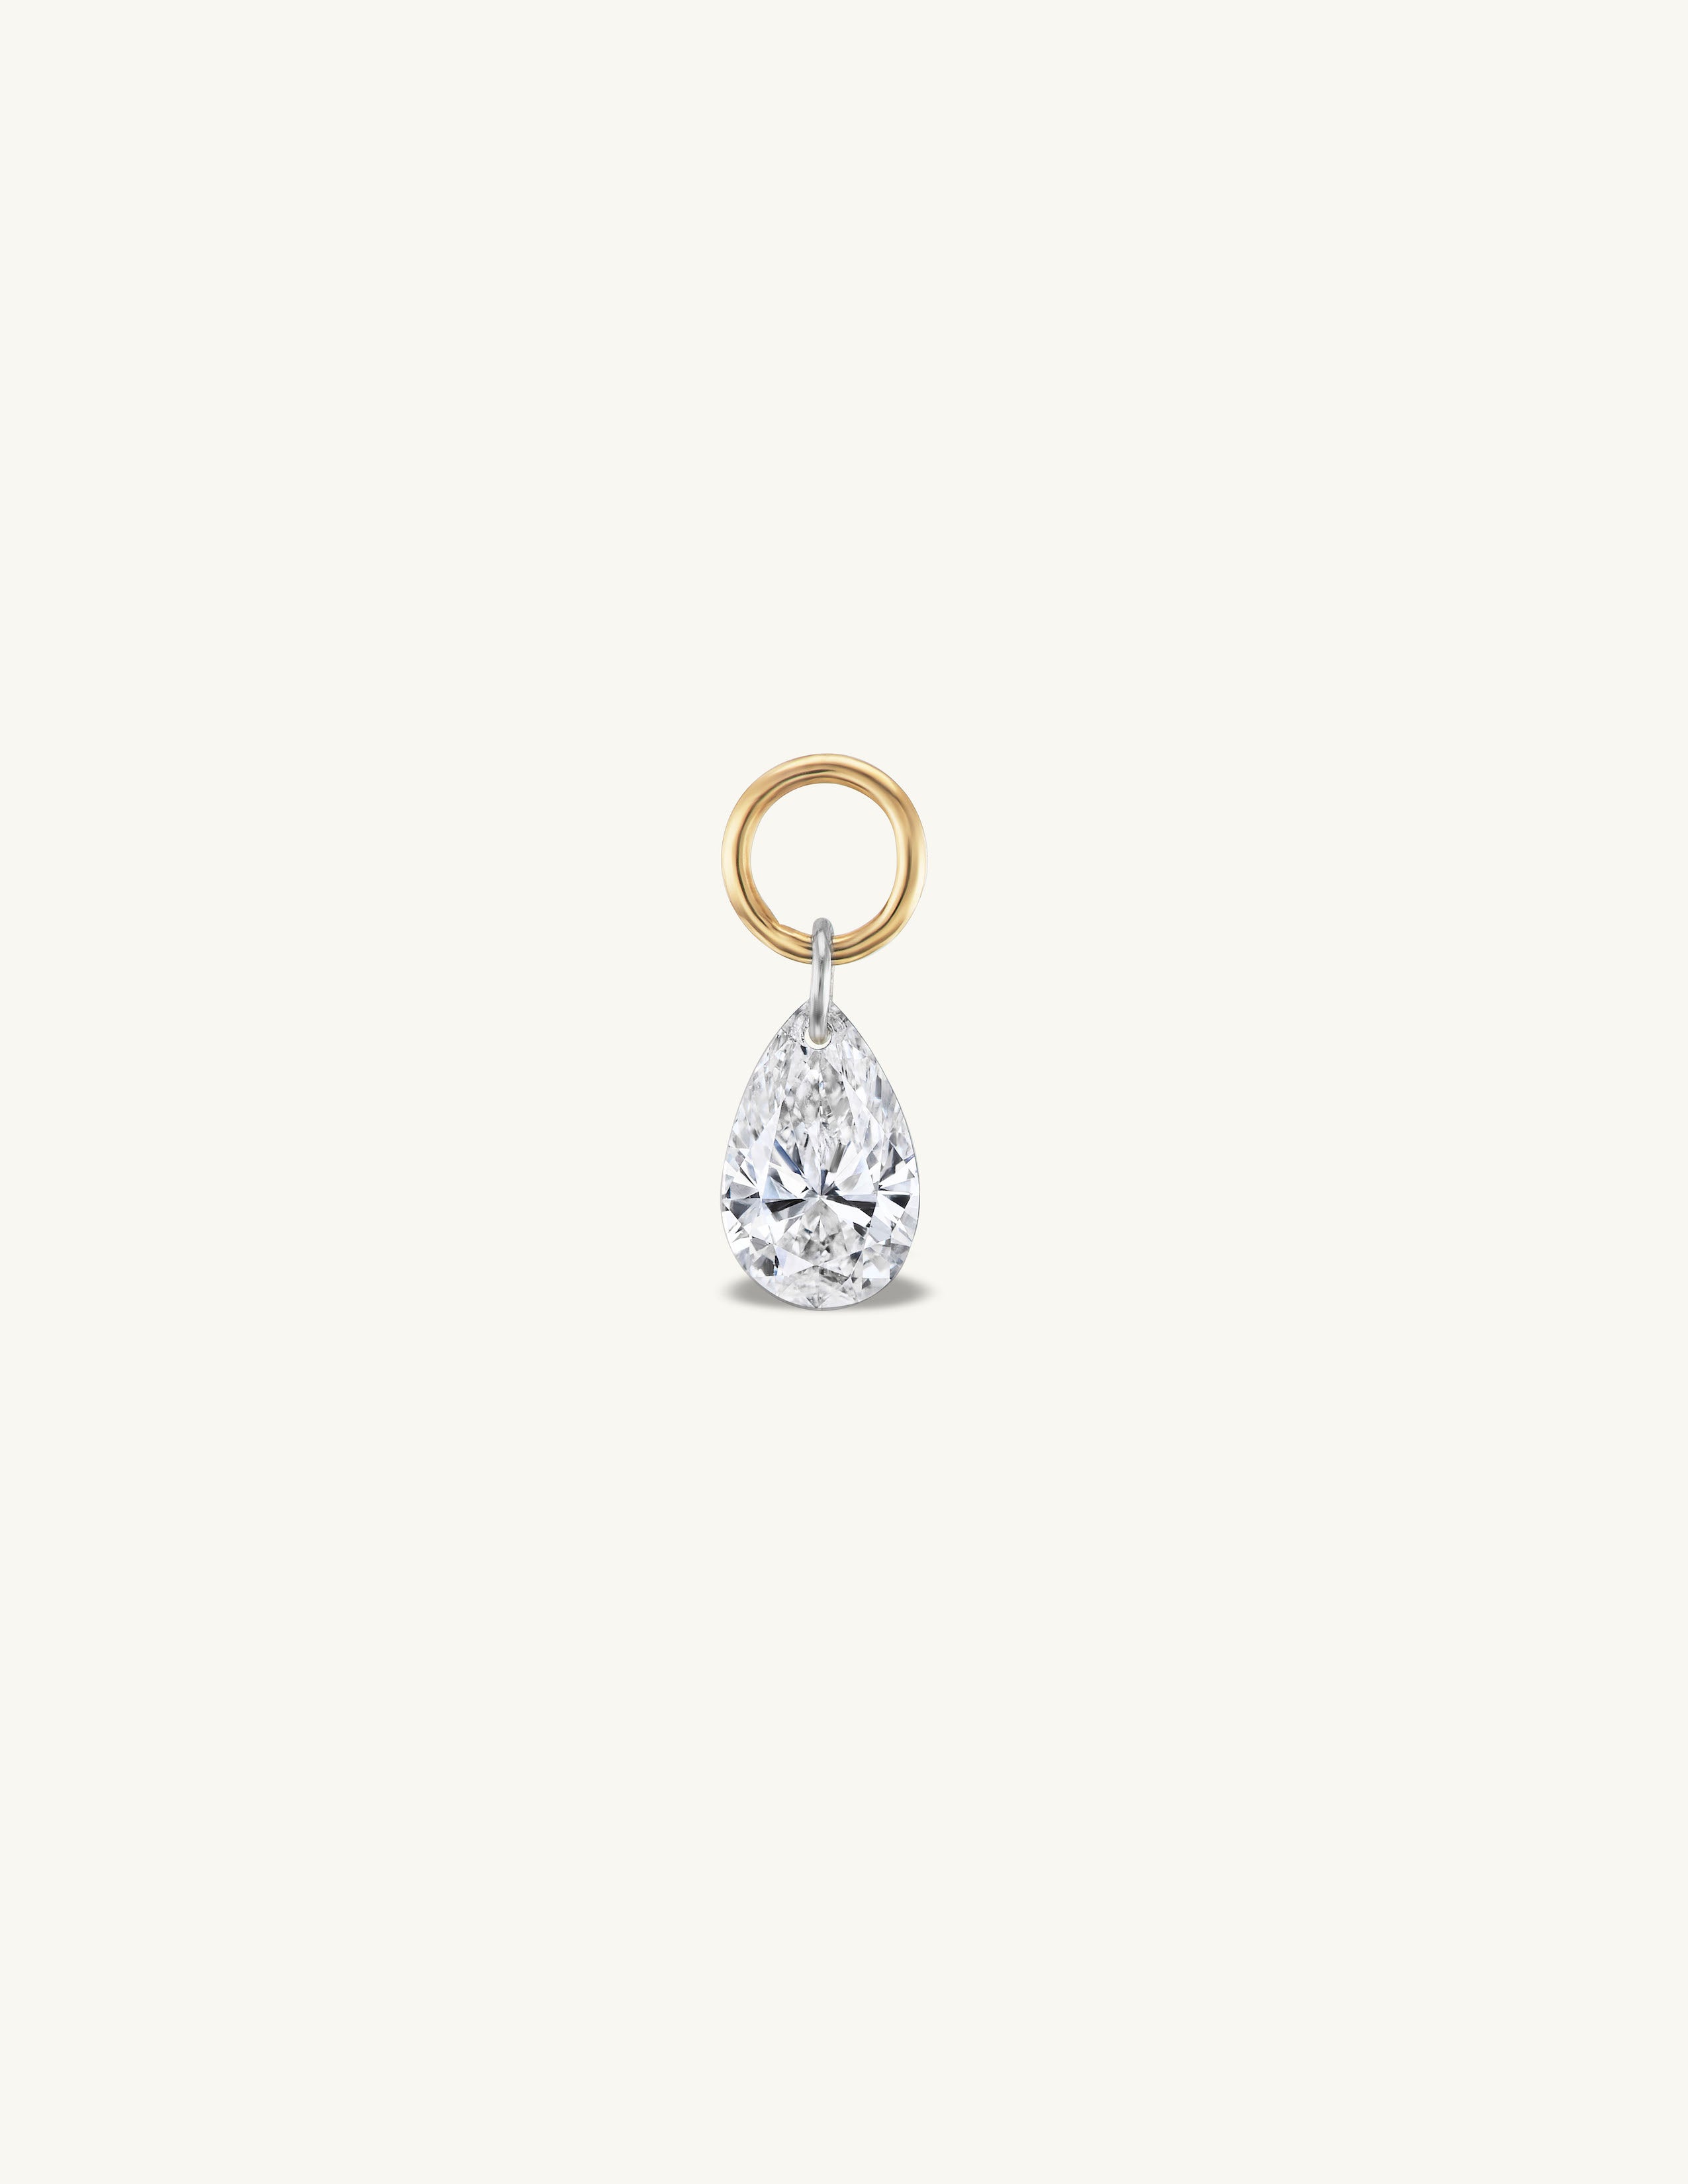 Small Pear Pierced Diamond Charm for Huggies